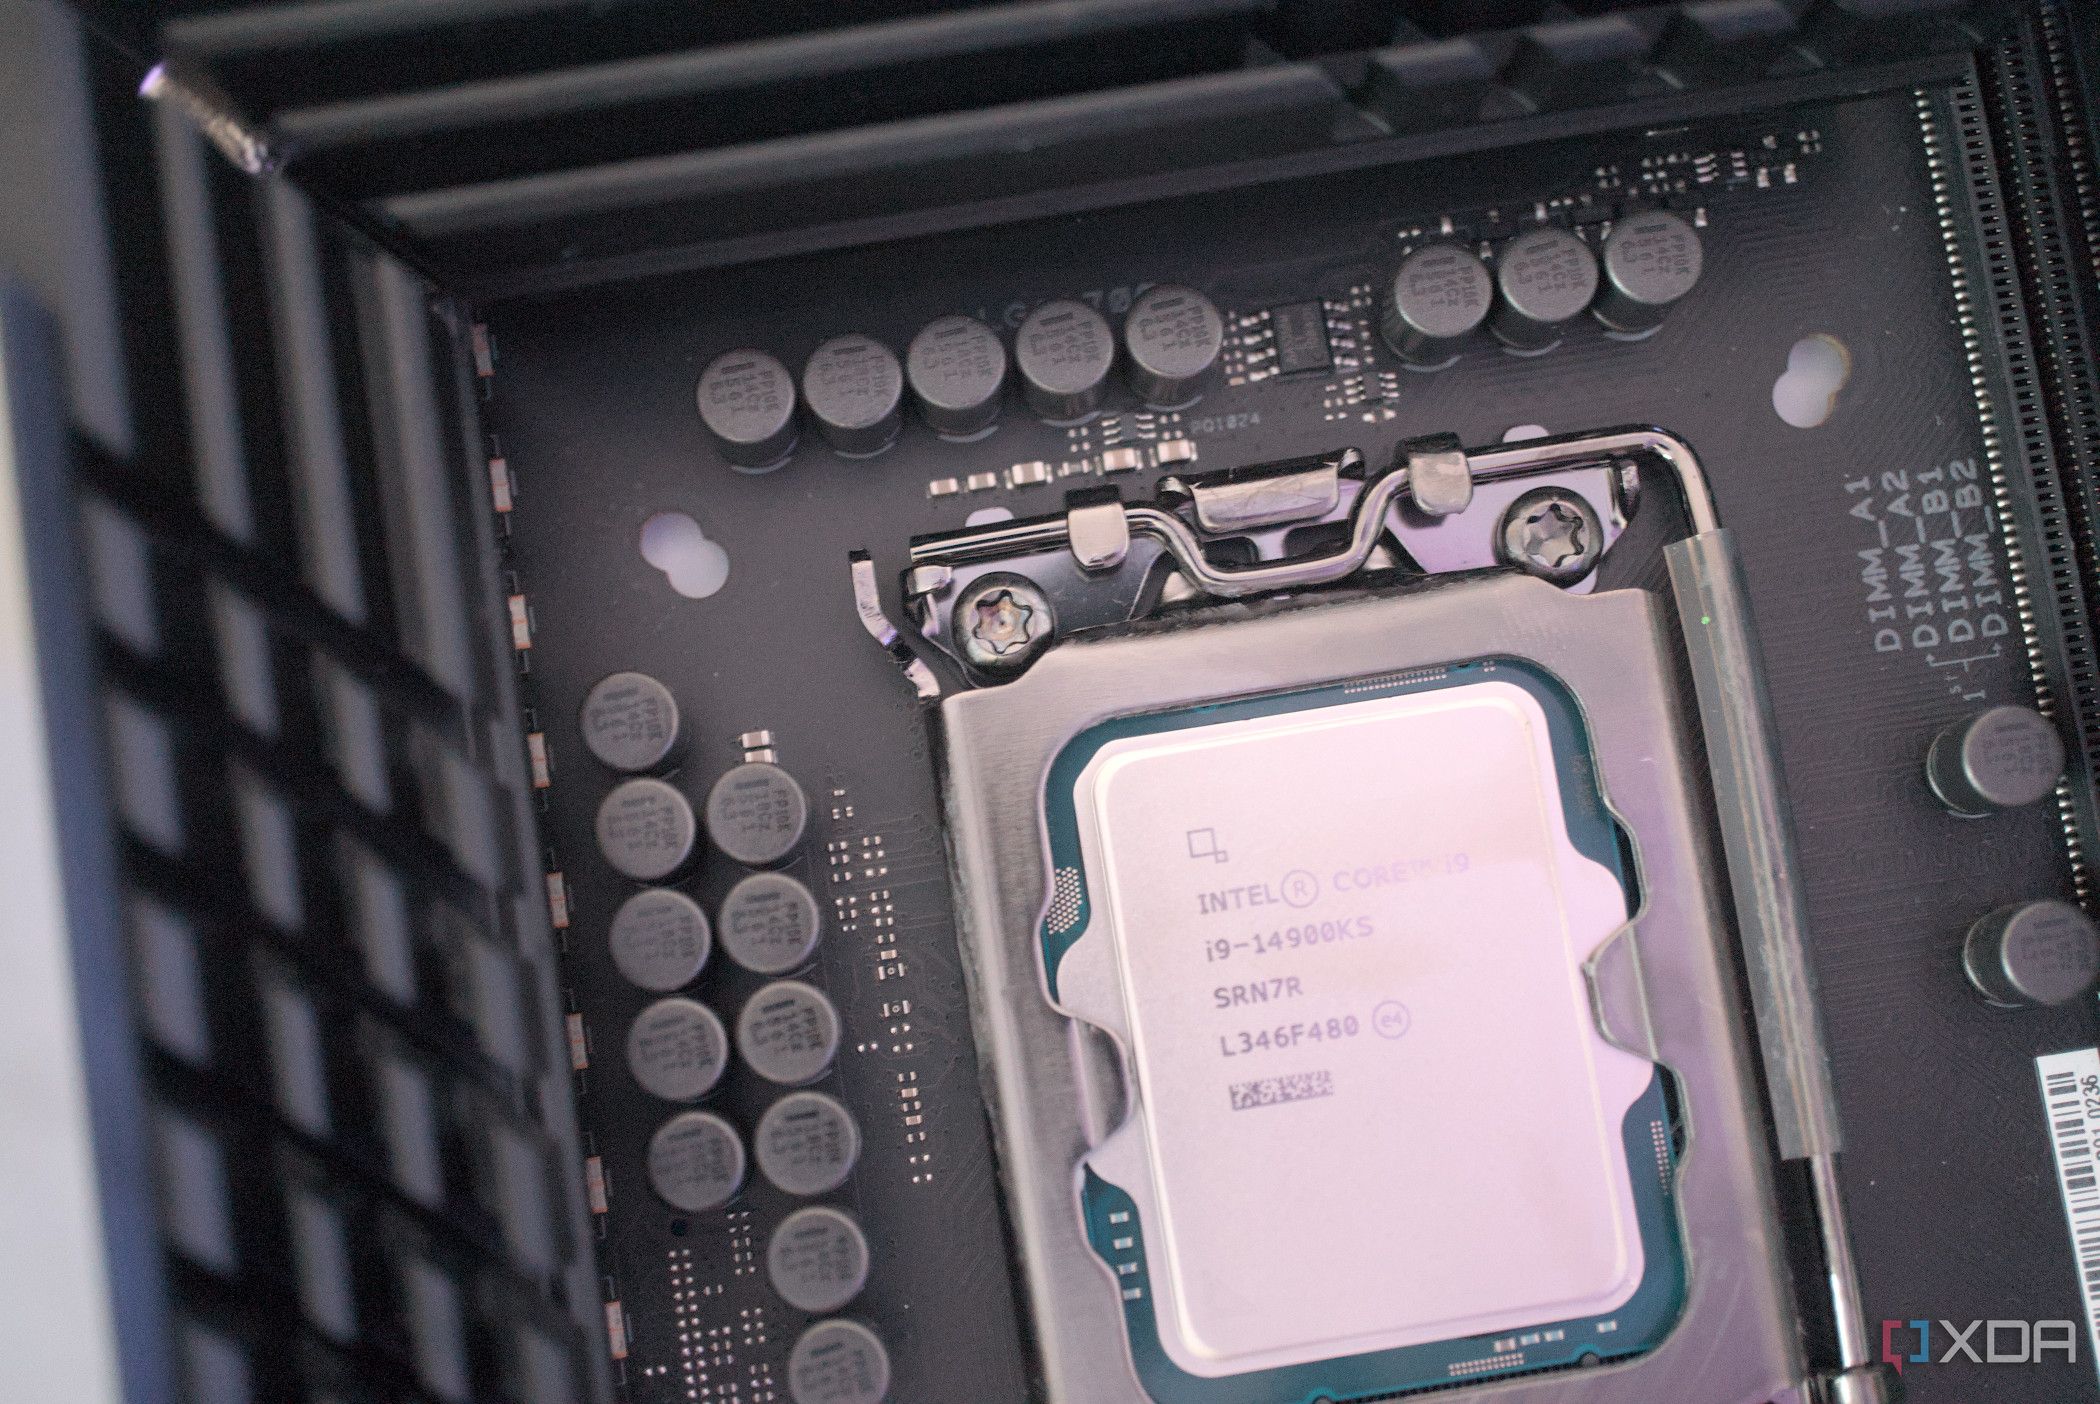 Intel Core i9-14900KS installed